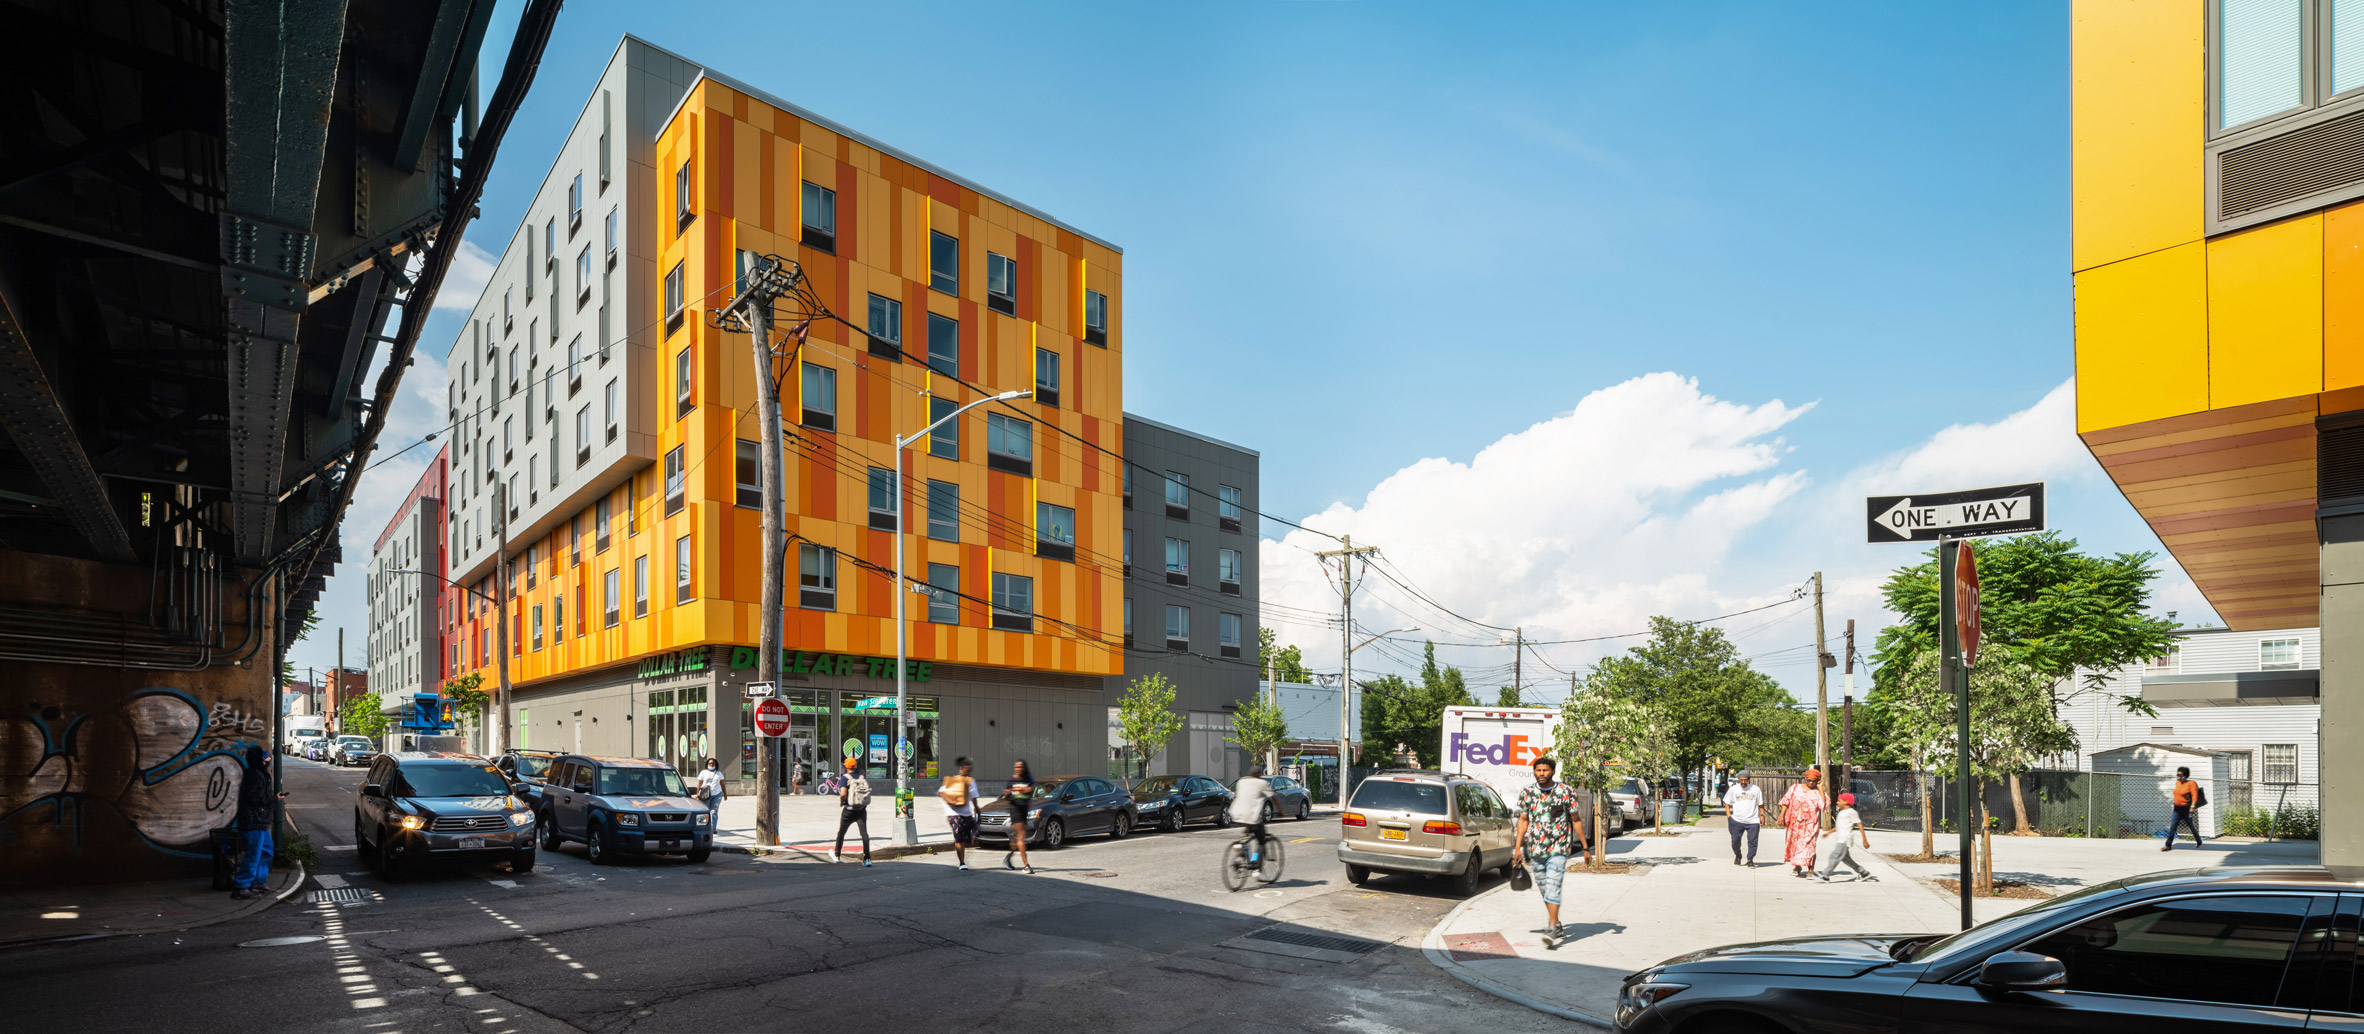 Geometric housing in low-rise Brooklyn neighbourhood